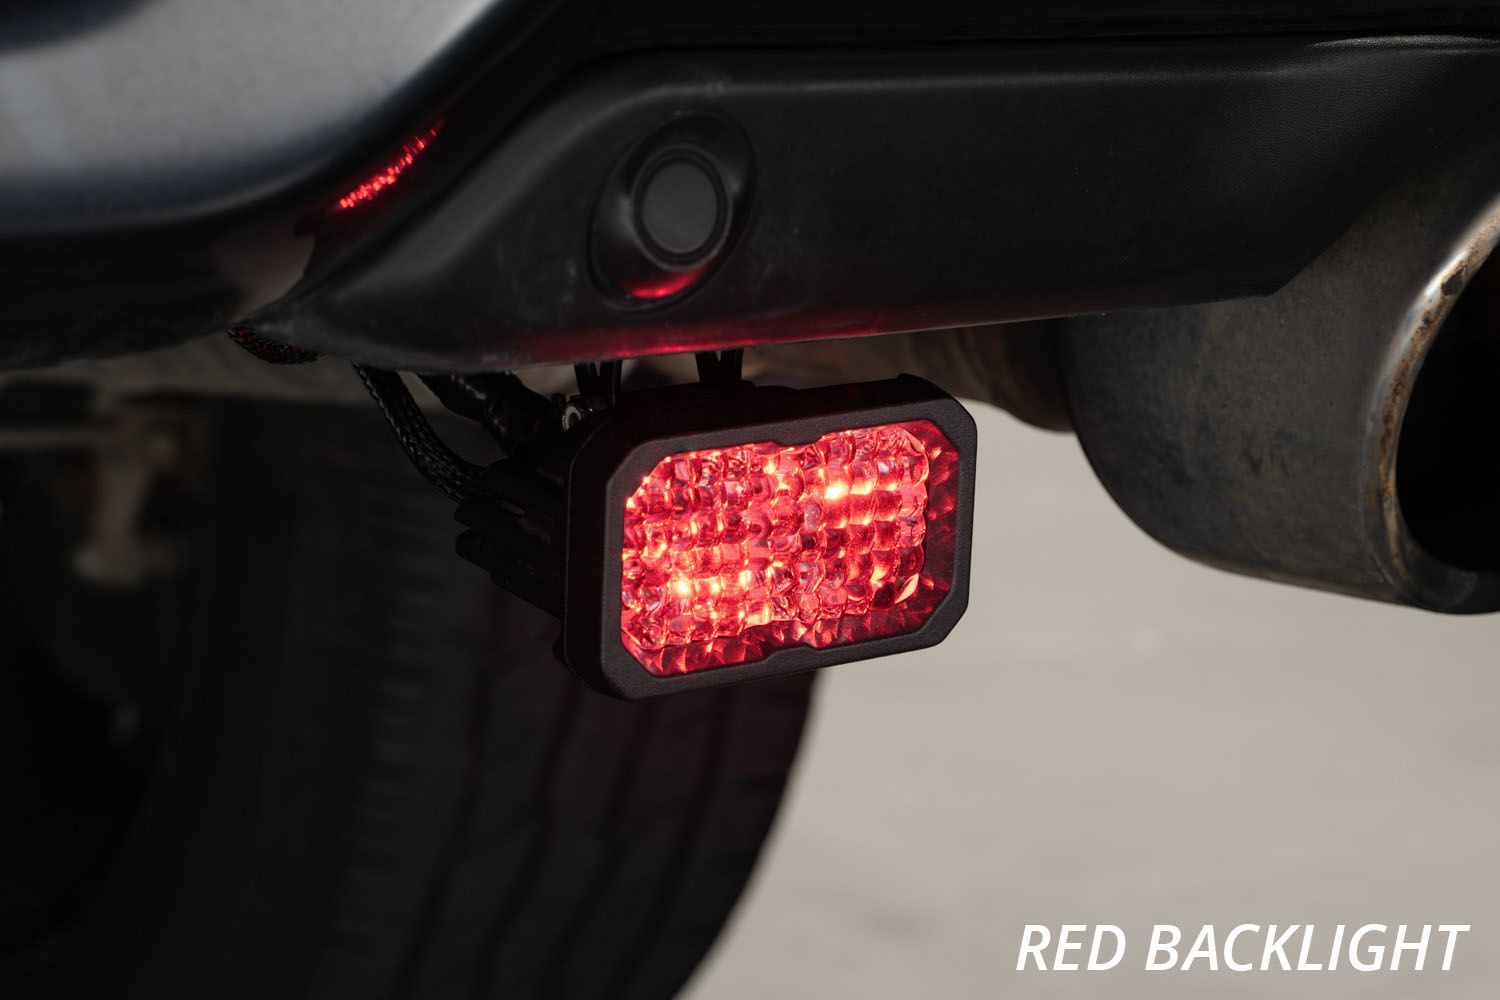 Stage Series Reverse Light Kit for 2019-2023 Ram 1500-